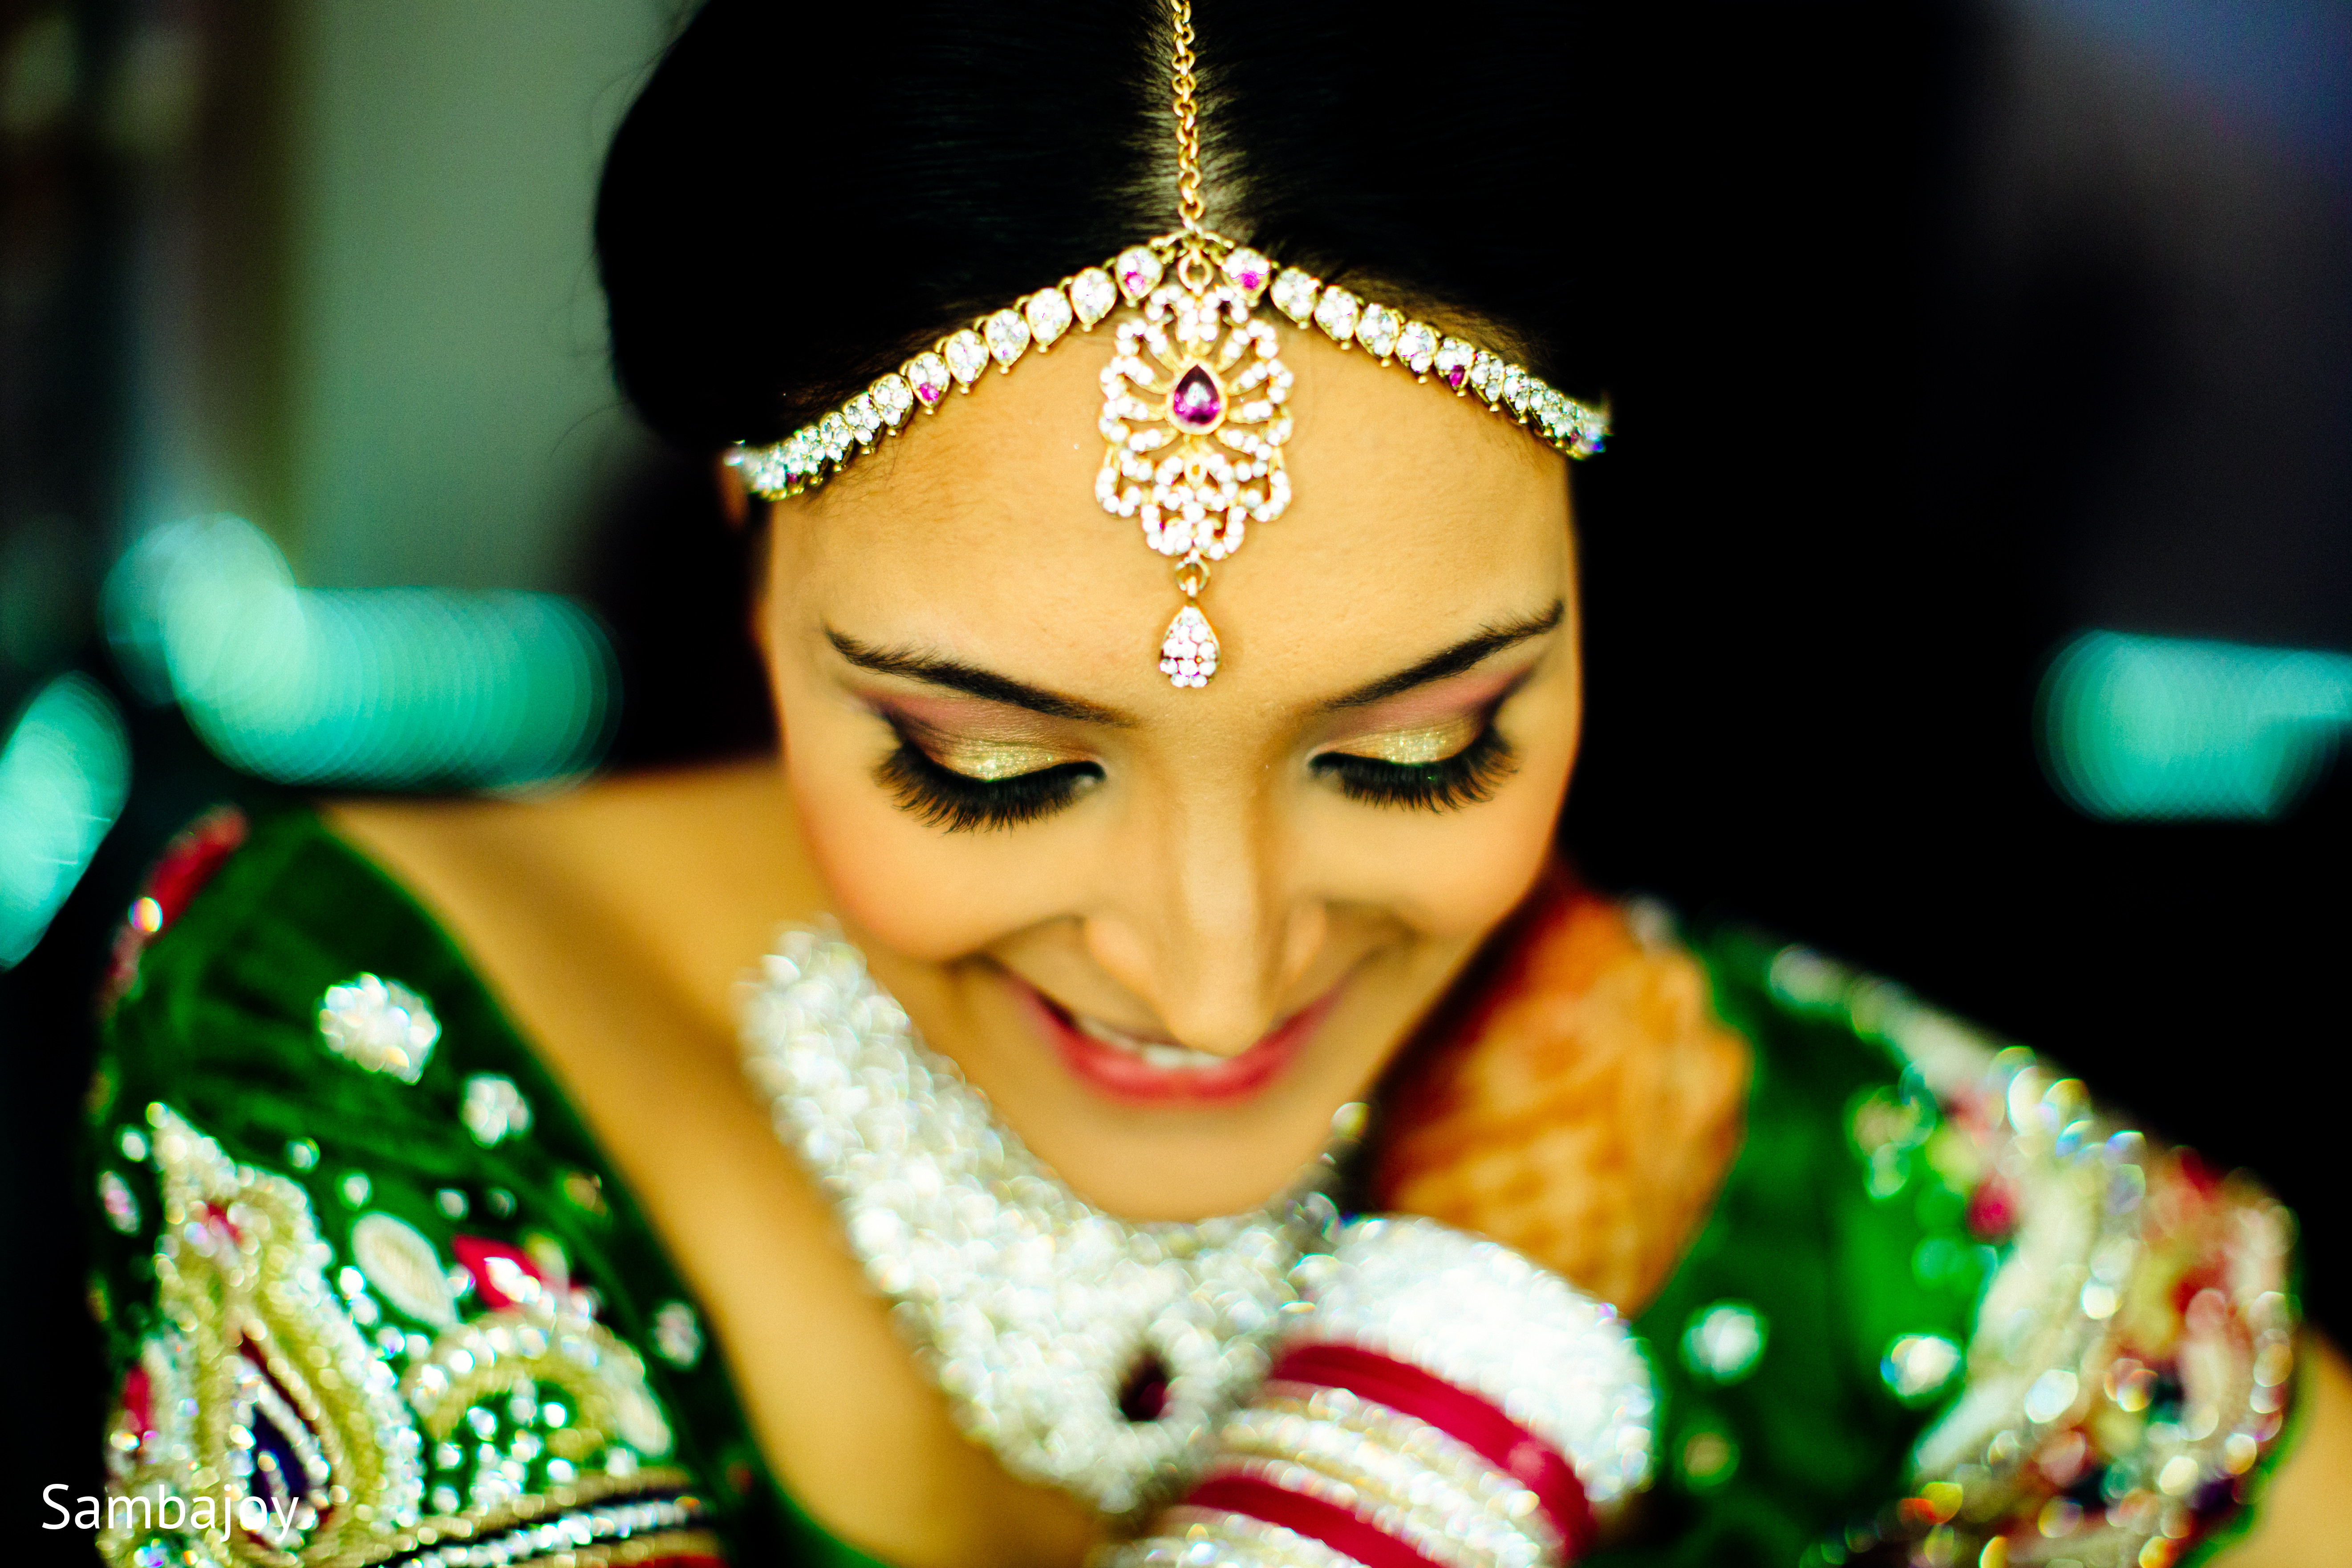 winnipeg, canada sikh wedding by sambajoy | post #4367